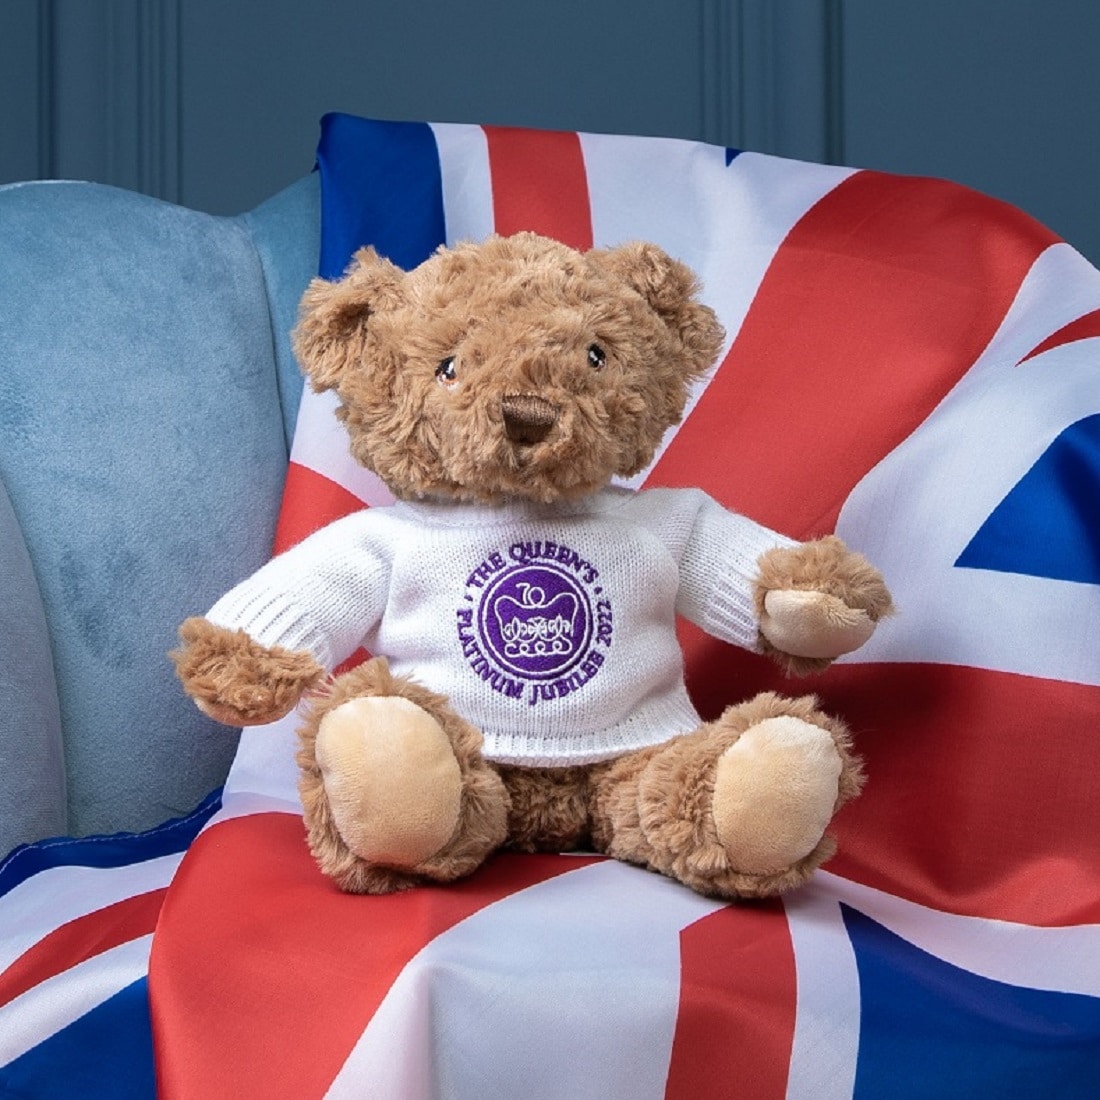 Queen Elizabeth II platinum jubilee 2022 collectable small teddy bear